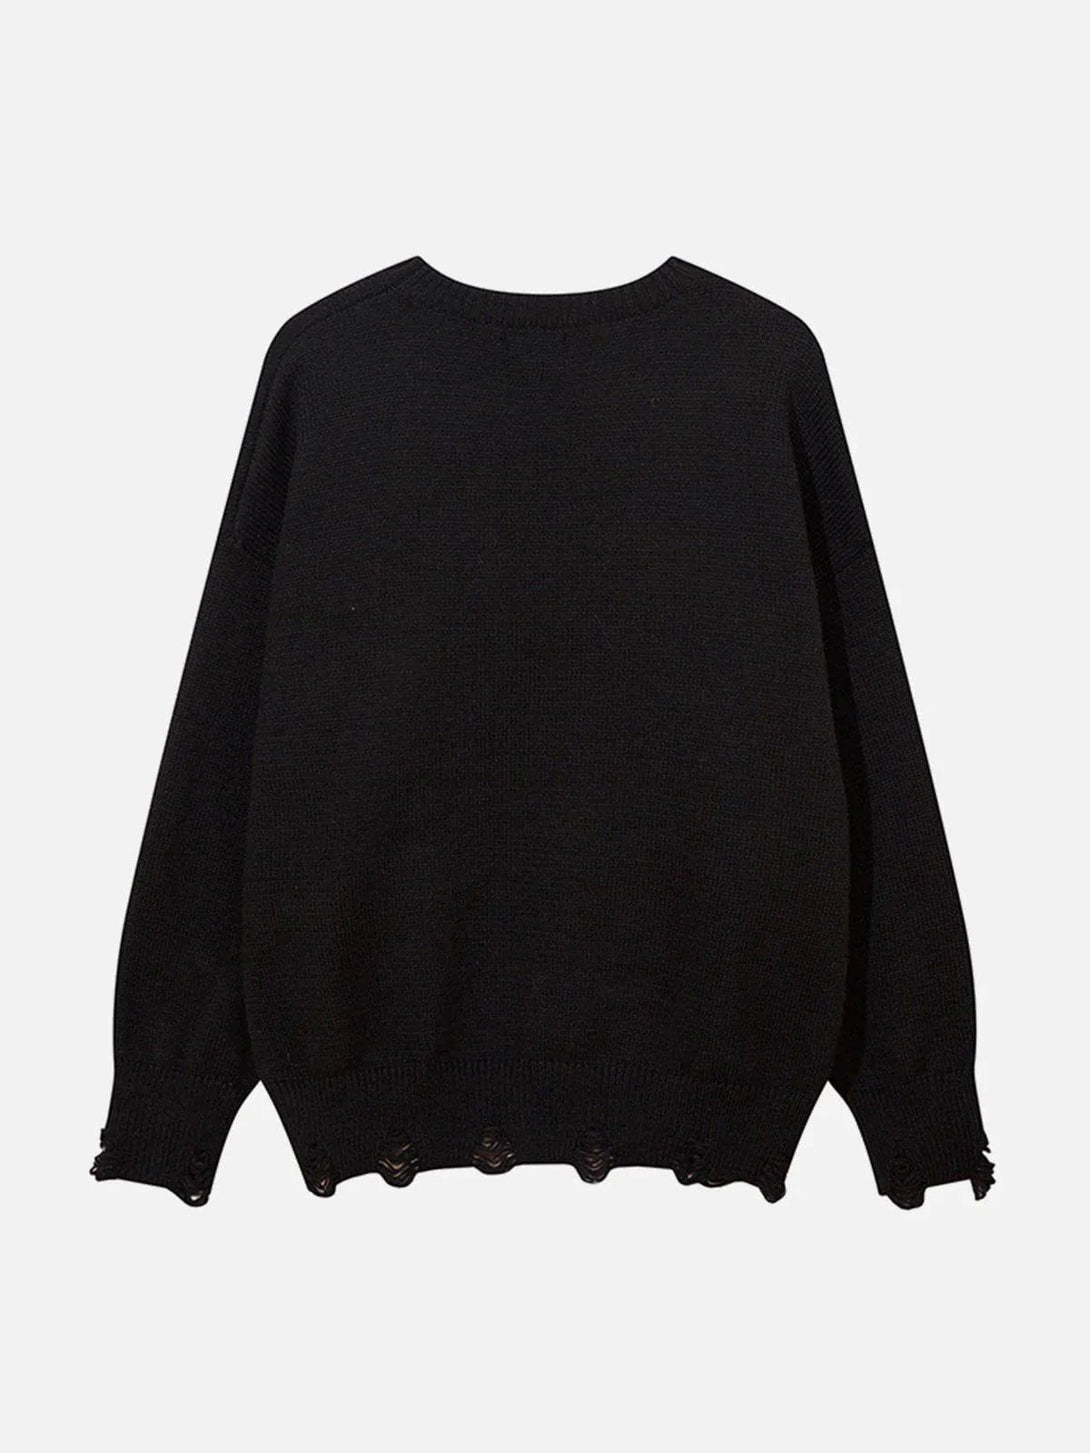 Majesda® - Ripped Pin Design Sweater outfit ideas streetwear fashion